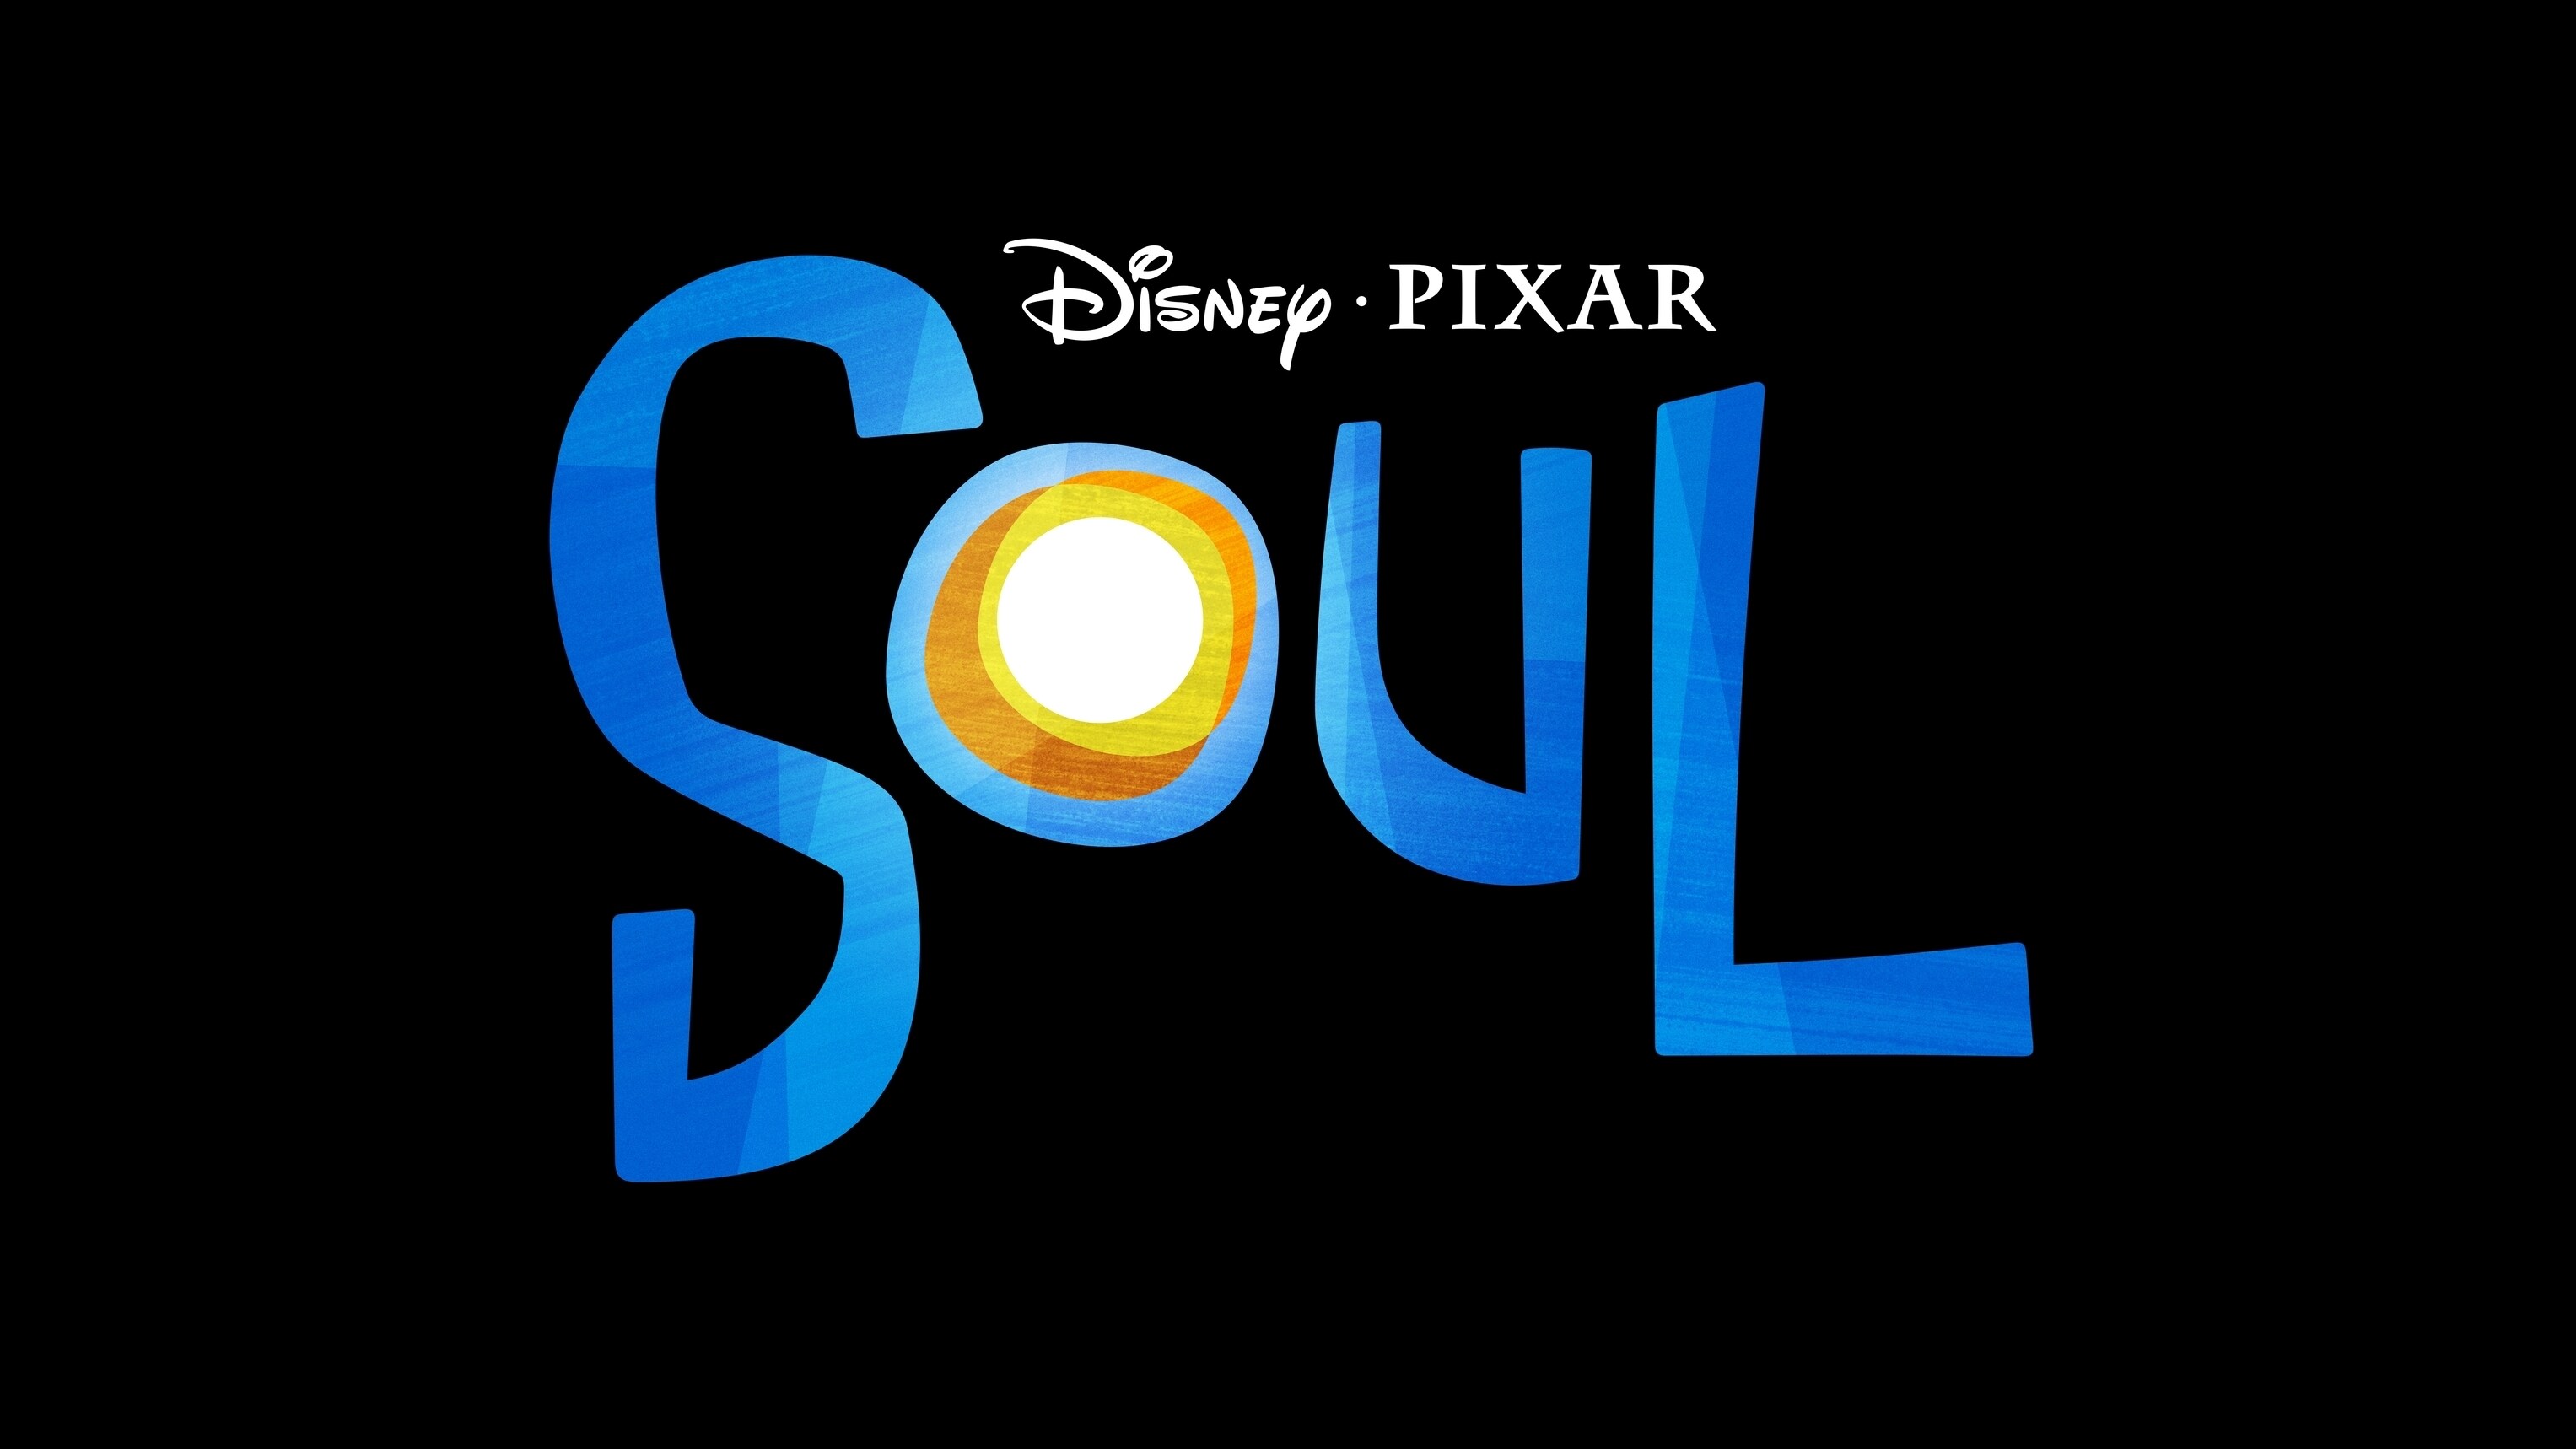 Disney & Pixar’s ‘Soul’ To Make Exclusive Holiday Debut On Disney+